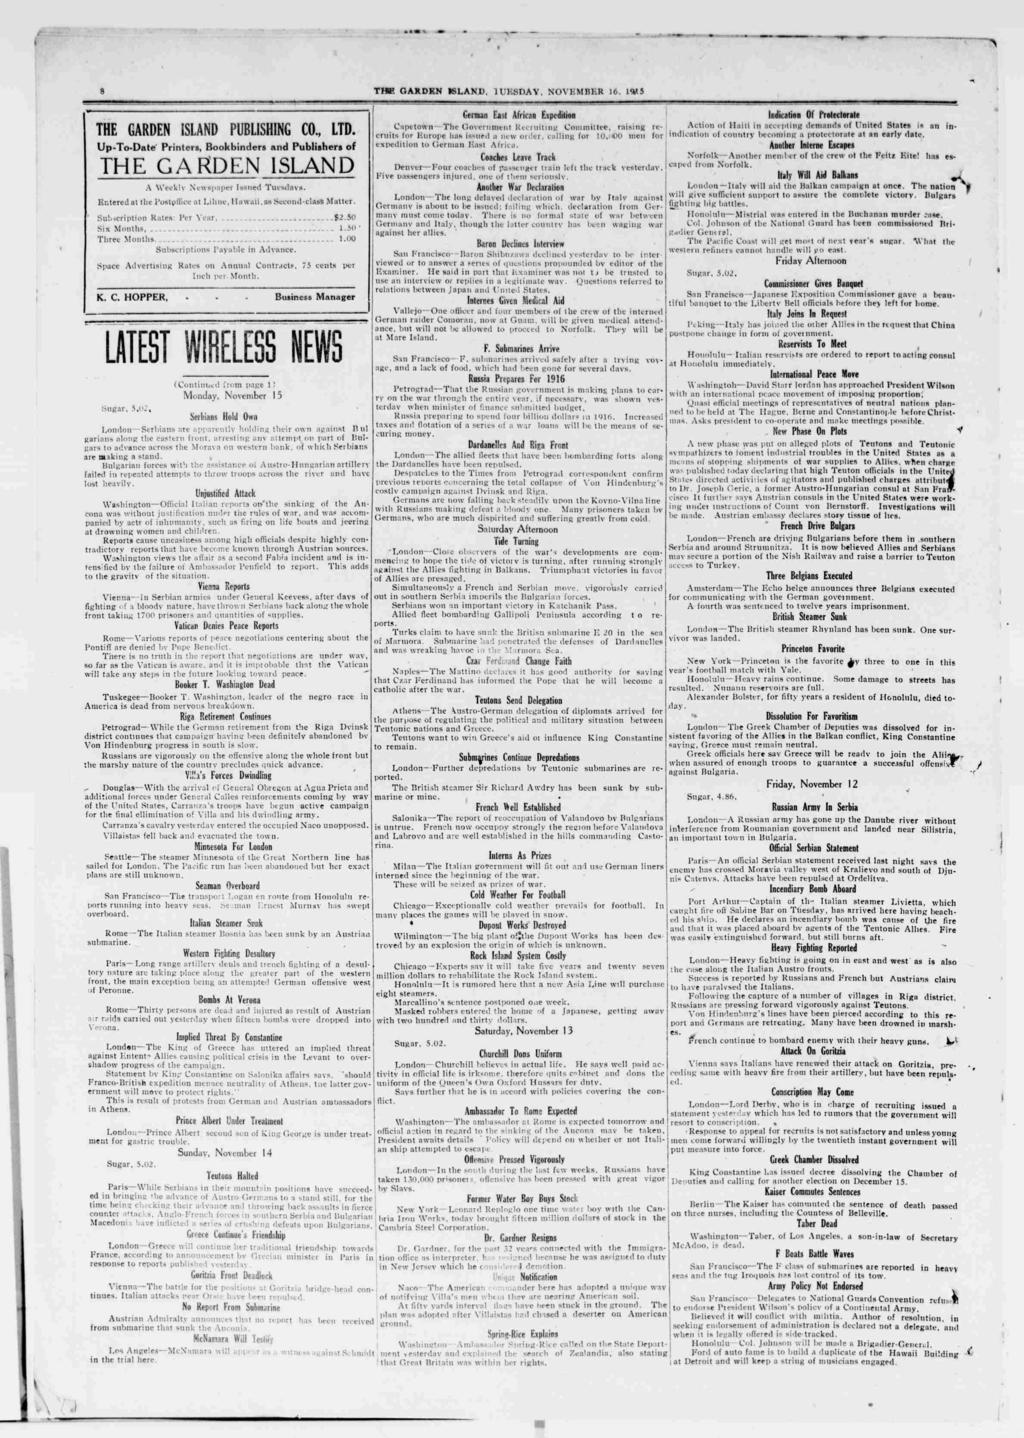 8 THE GARDEN SLANJ) 1UKSDAY NOVEMBER 16 1915 THE GARDEN SLAND PUBLSHNG CO. LTD. Bookbnders and Publshers of UpToDa te Prnters THE GARDEN SLAND A Weekly Newspaper ssued Tuesdays.